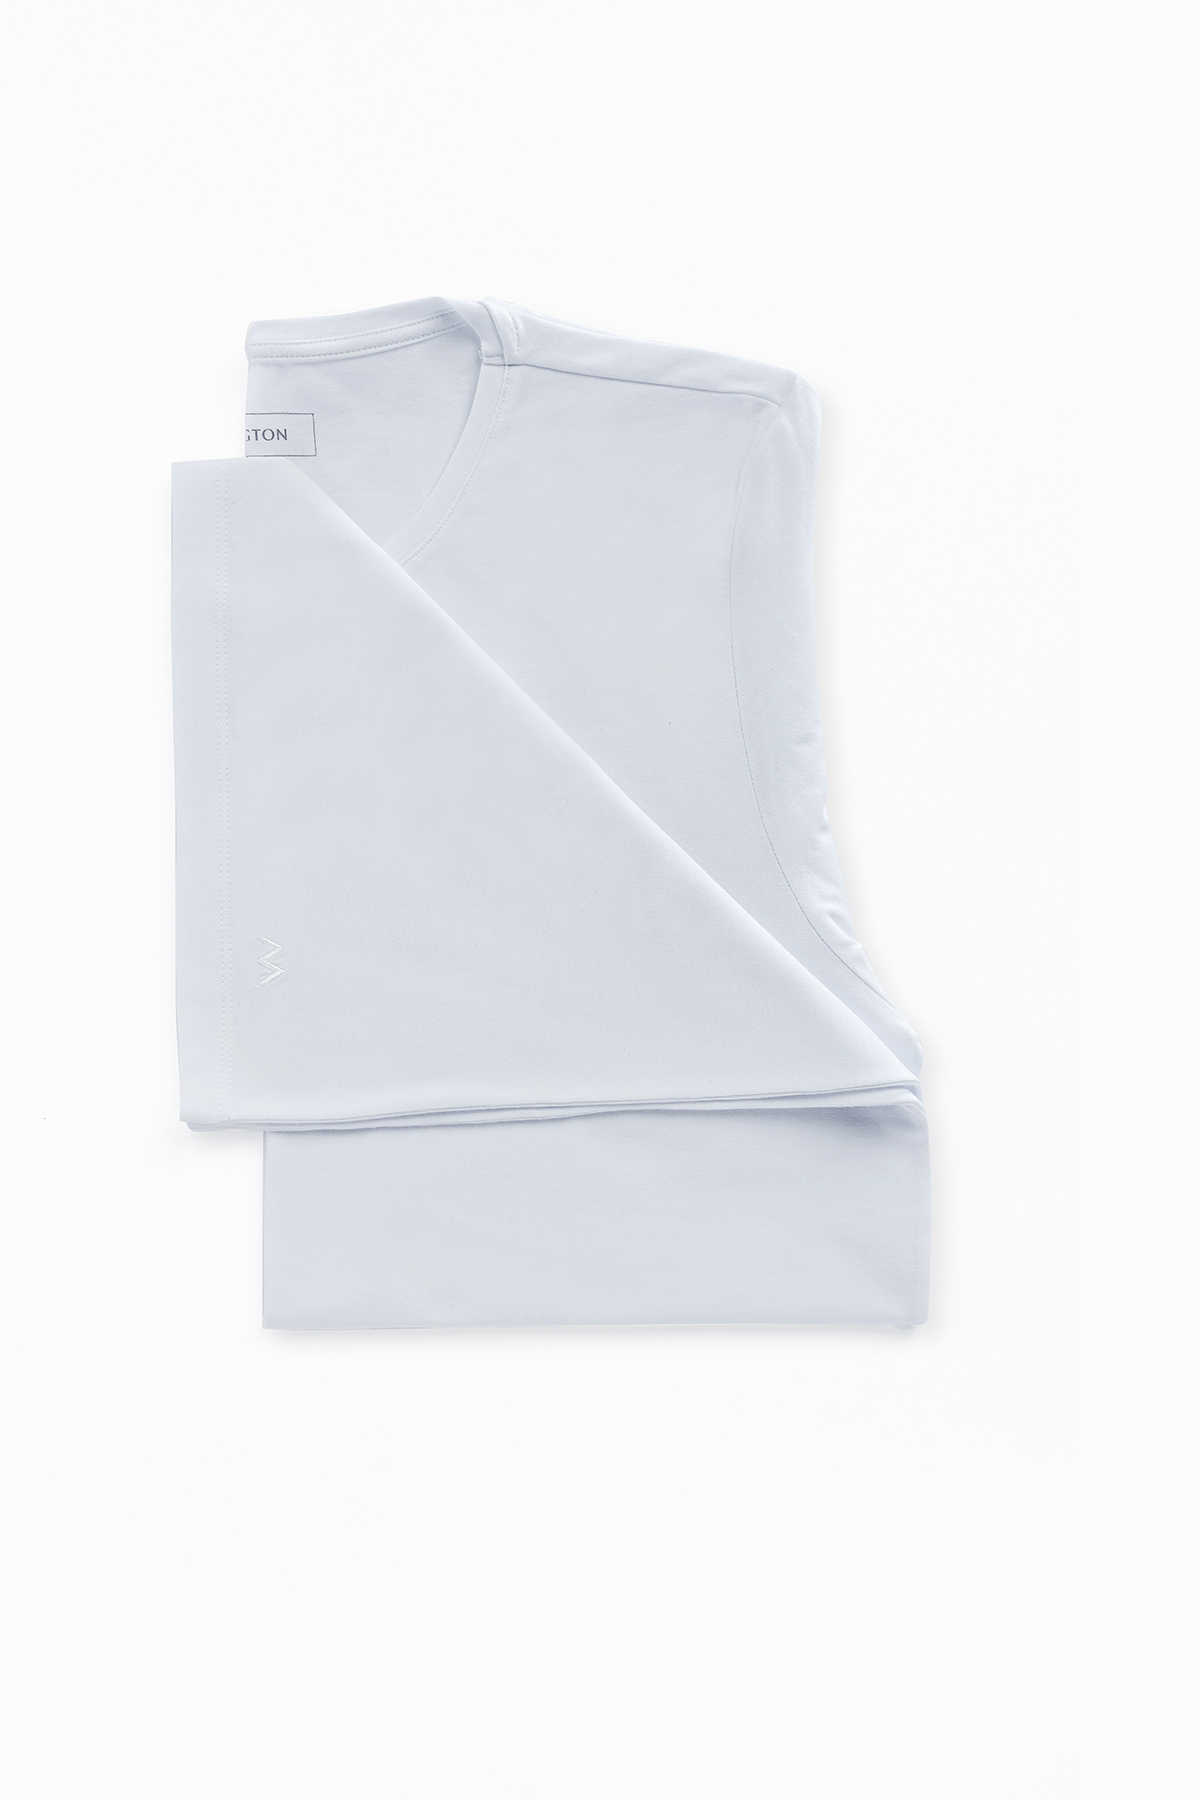 Siyah-Beyaz İkili İç Giyim T-Shirt Seti